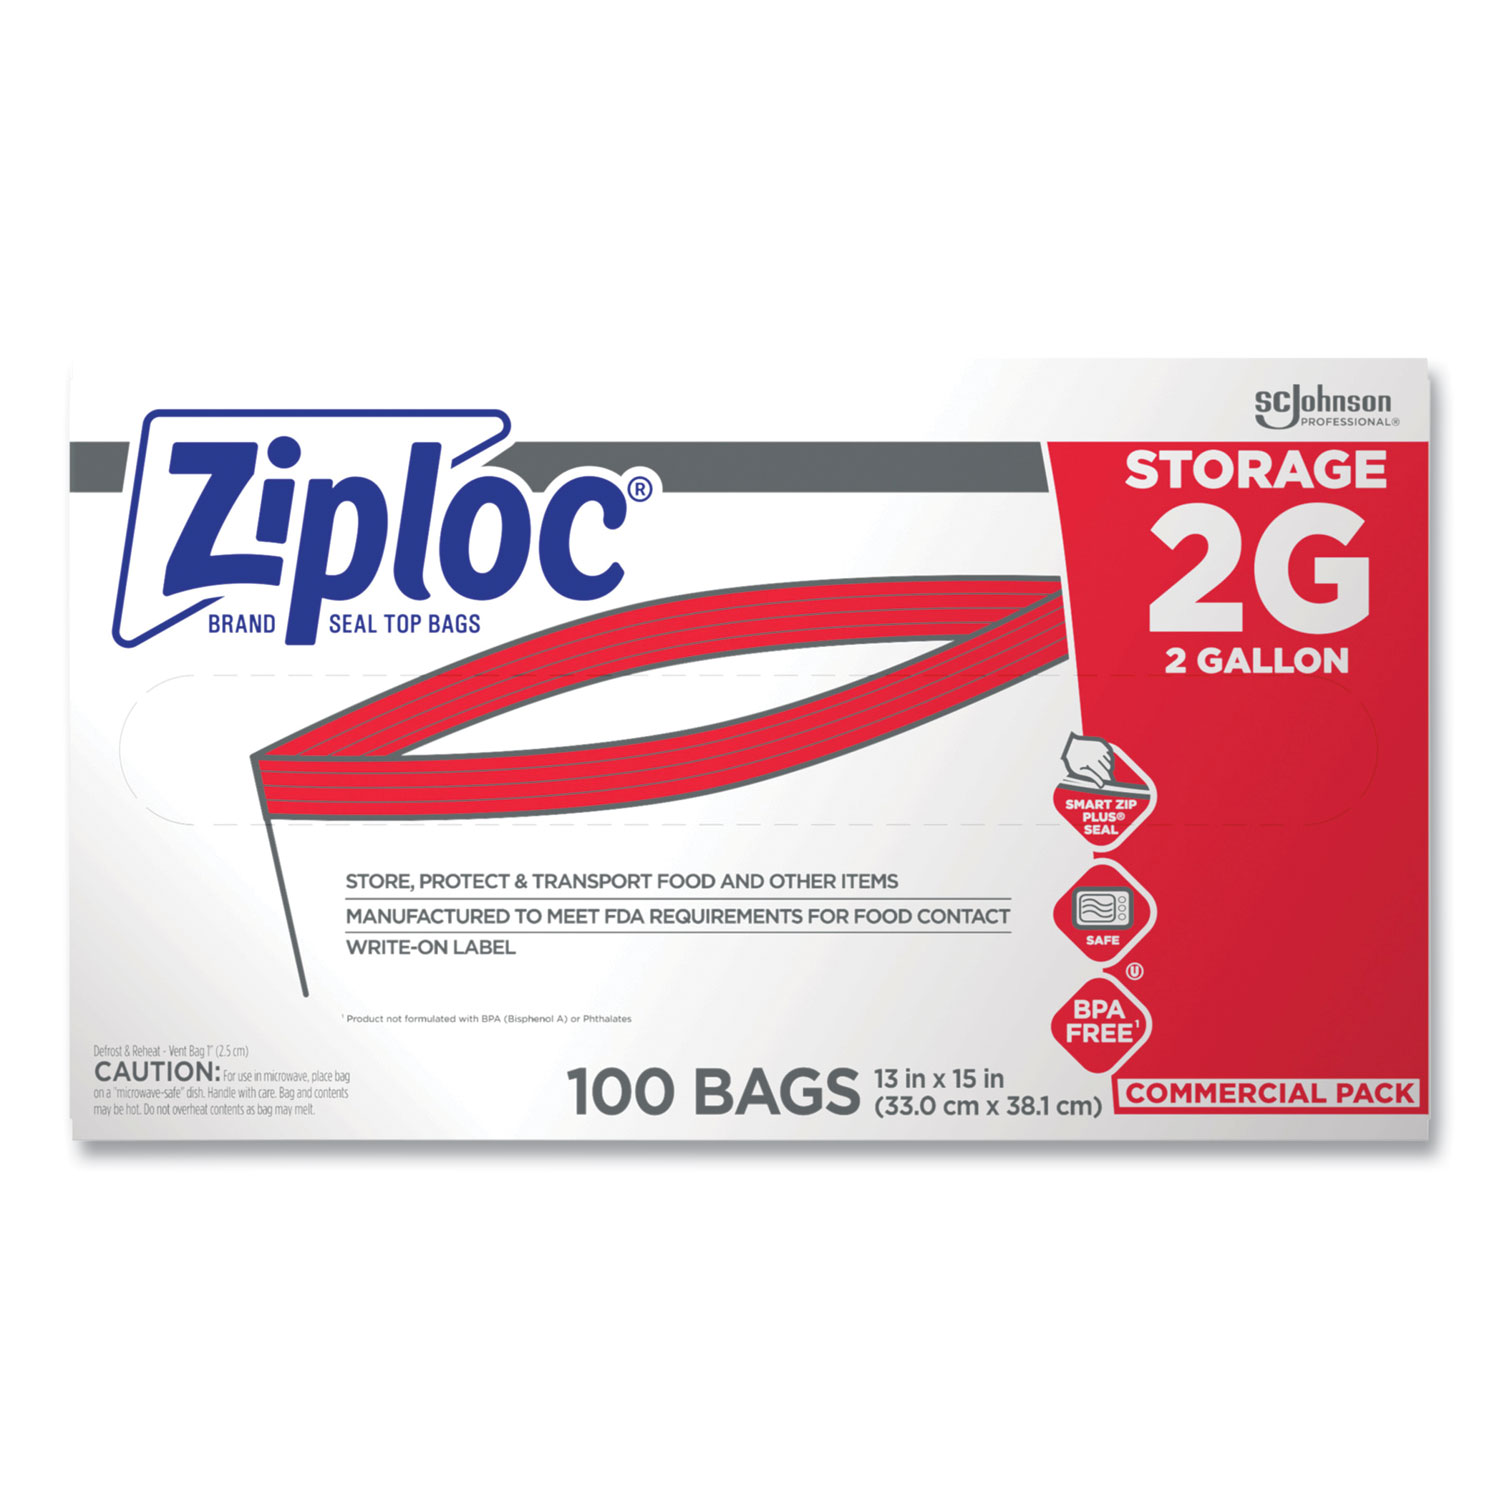 Ziploc Gallon Storage Seal Top Storage Bags 10.56 x 10.75 (38 ct)